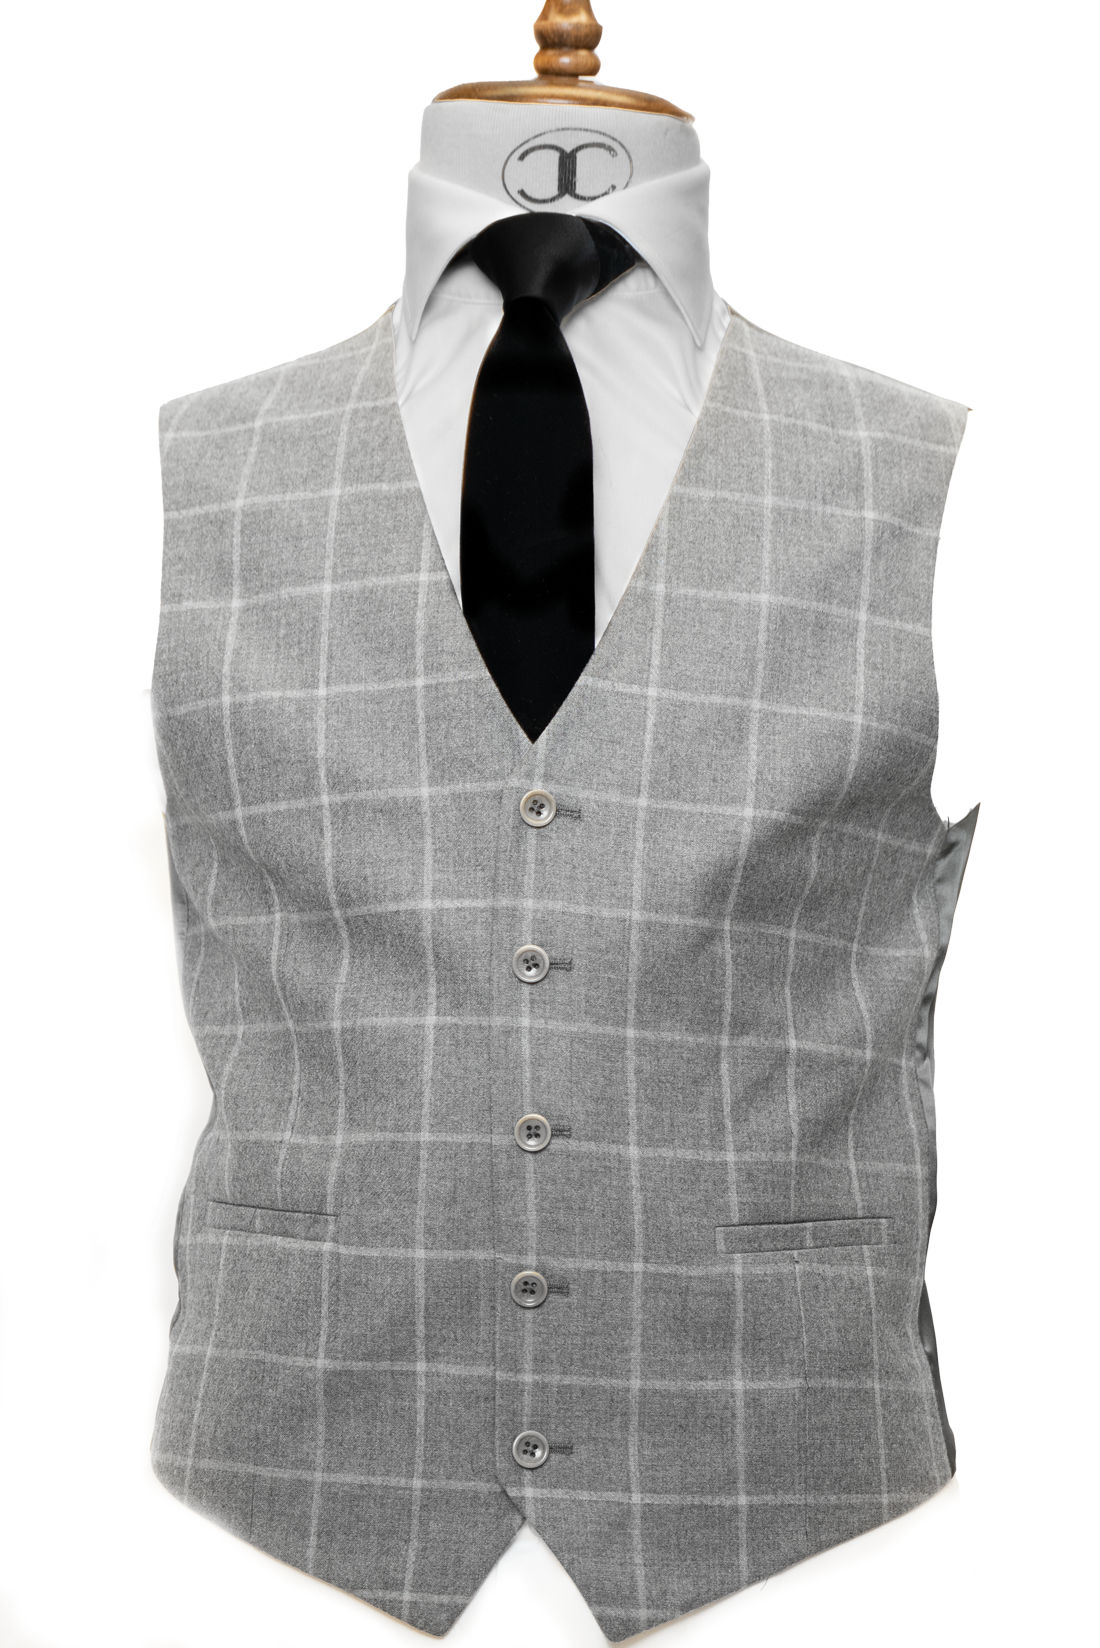 Zignone - Ash Grey with Chalk windowpane cashmere 3-piece slim fit suit